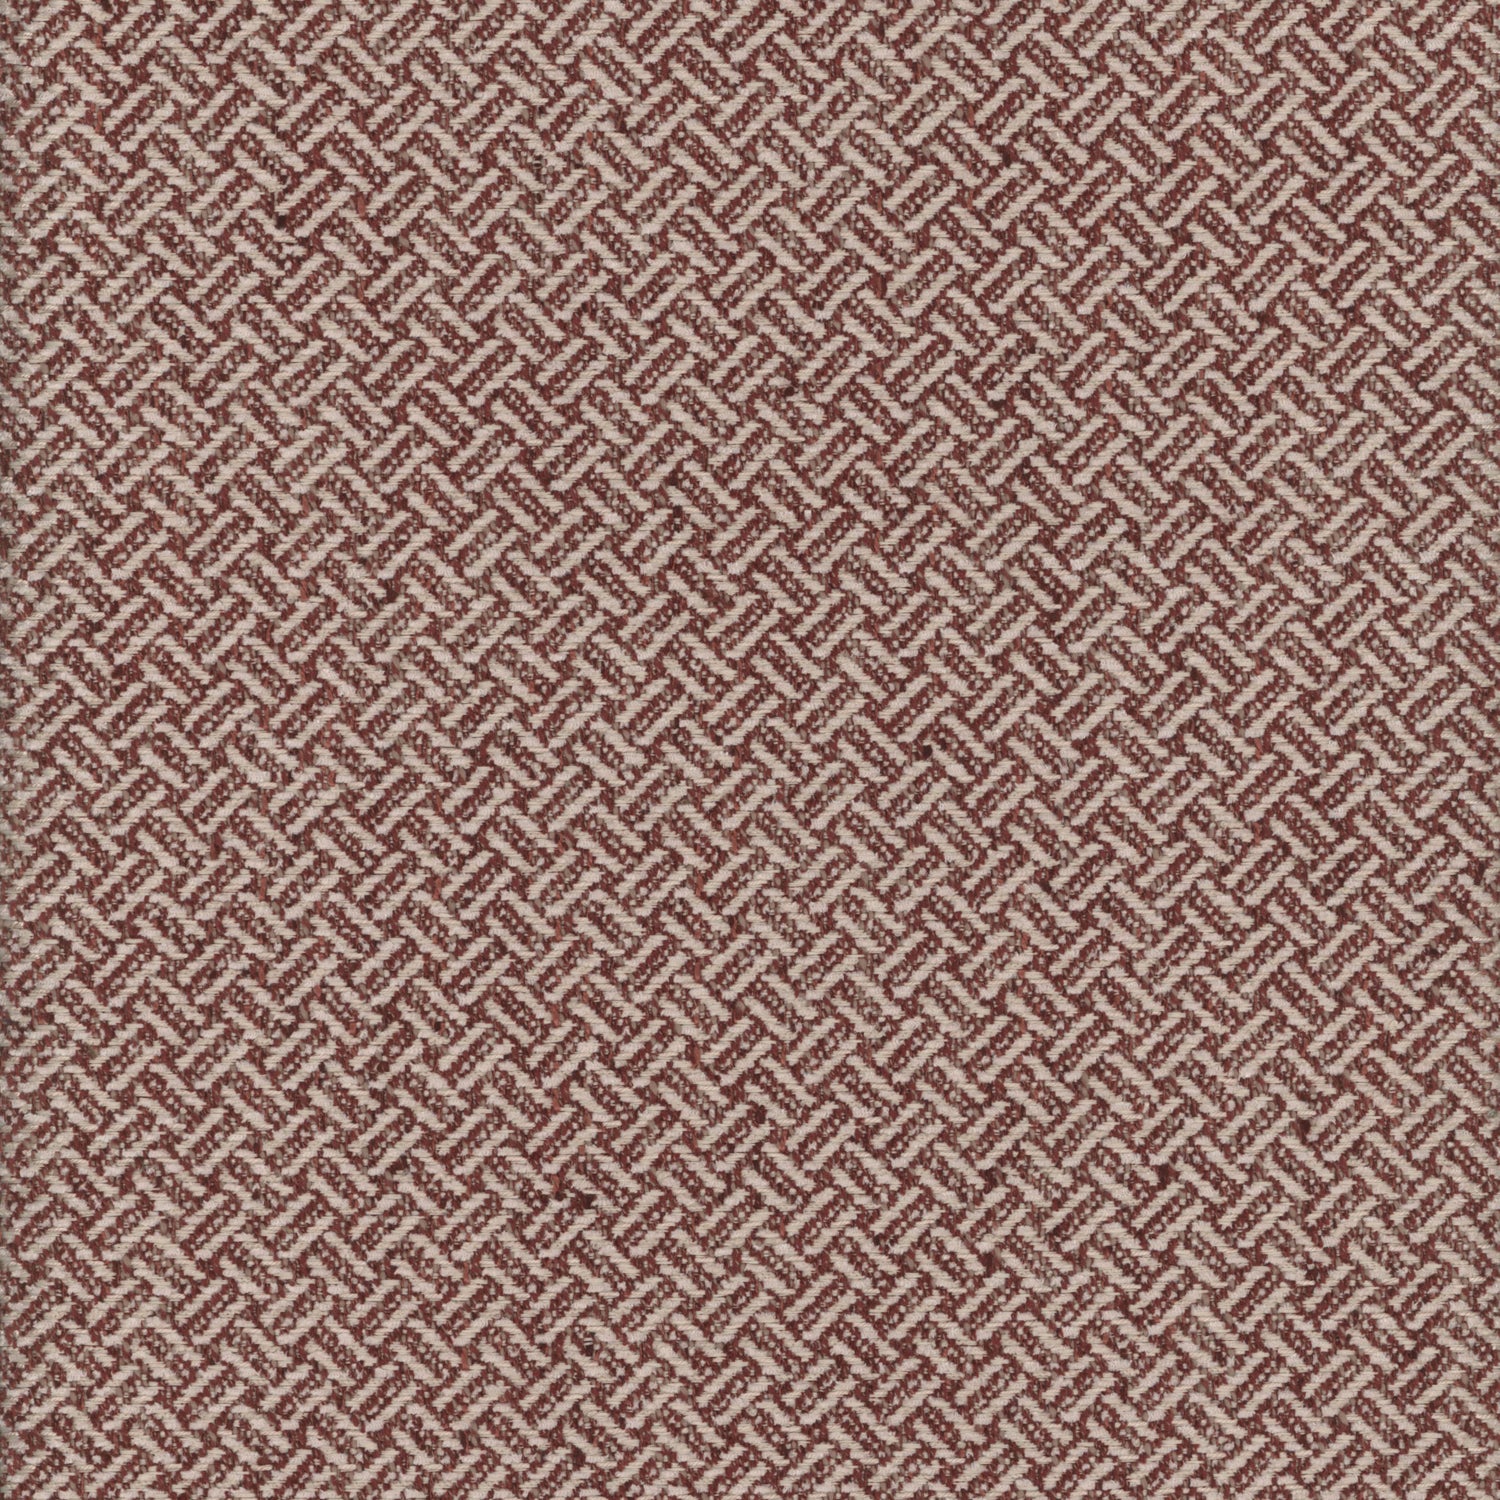 4854-61 Fabric - Stickley Brand